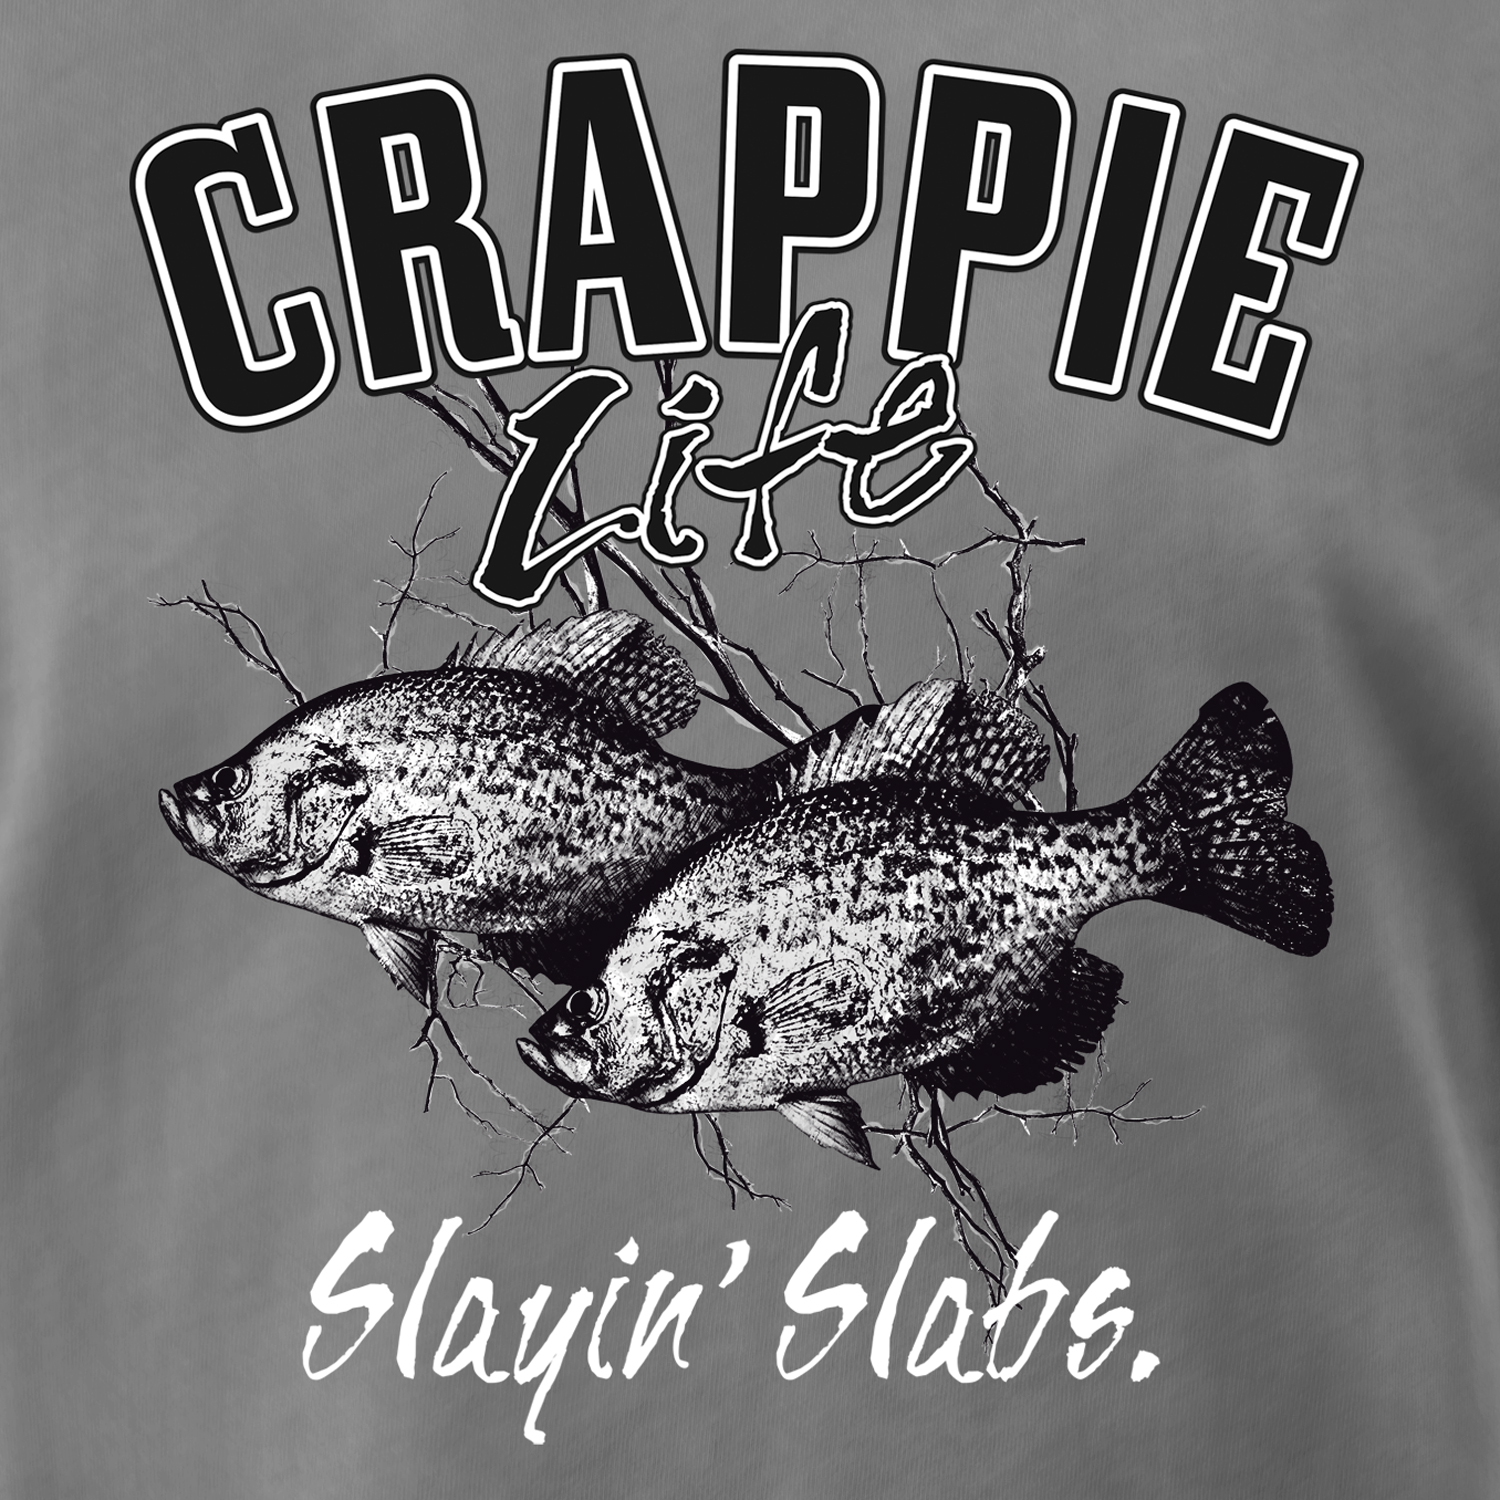 Long Sleeve Crappie Fishing T Shirts